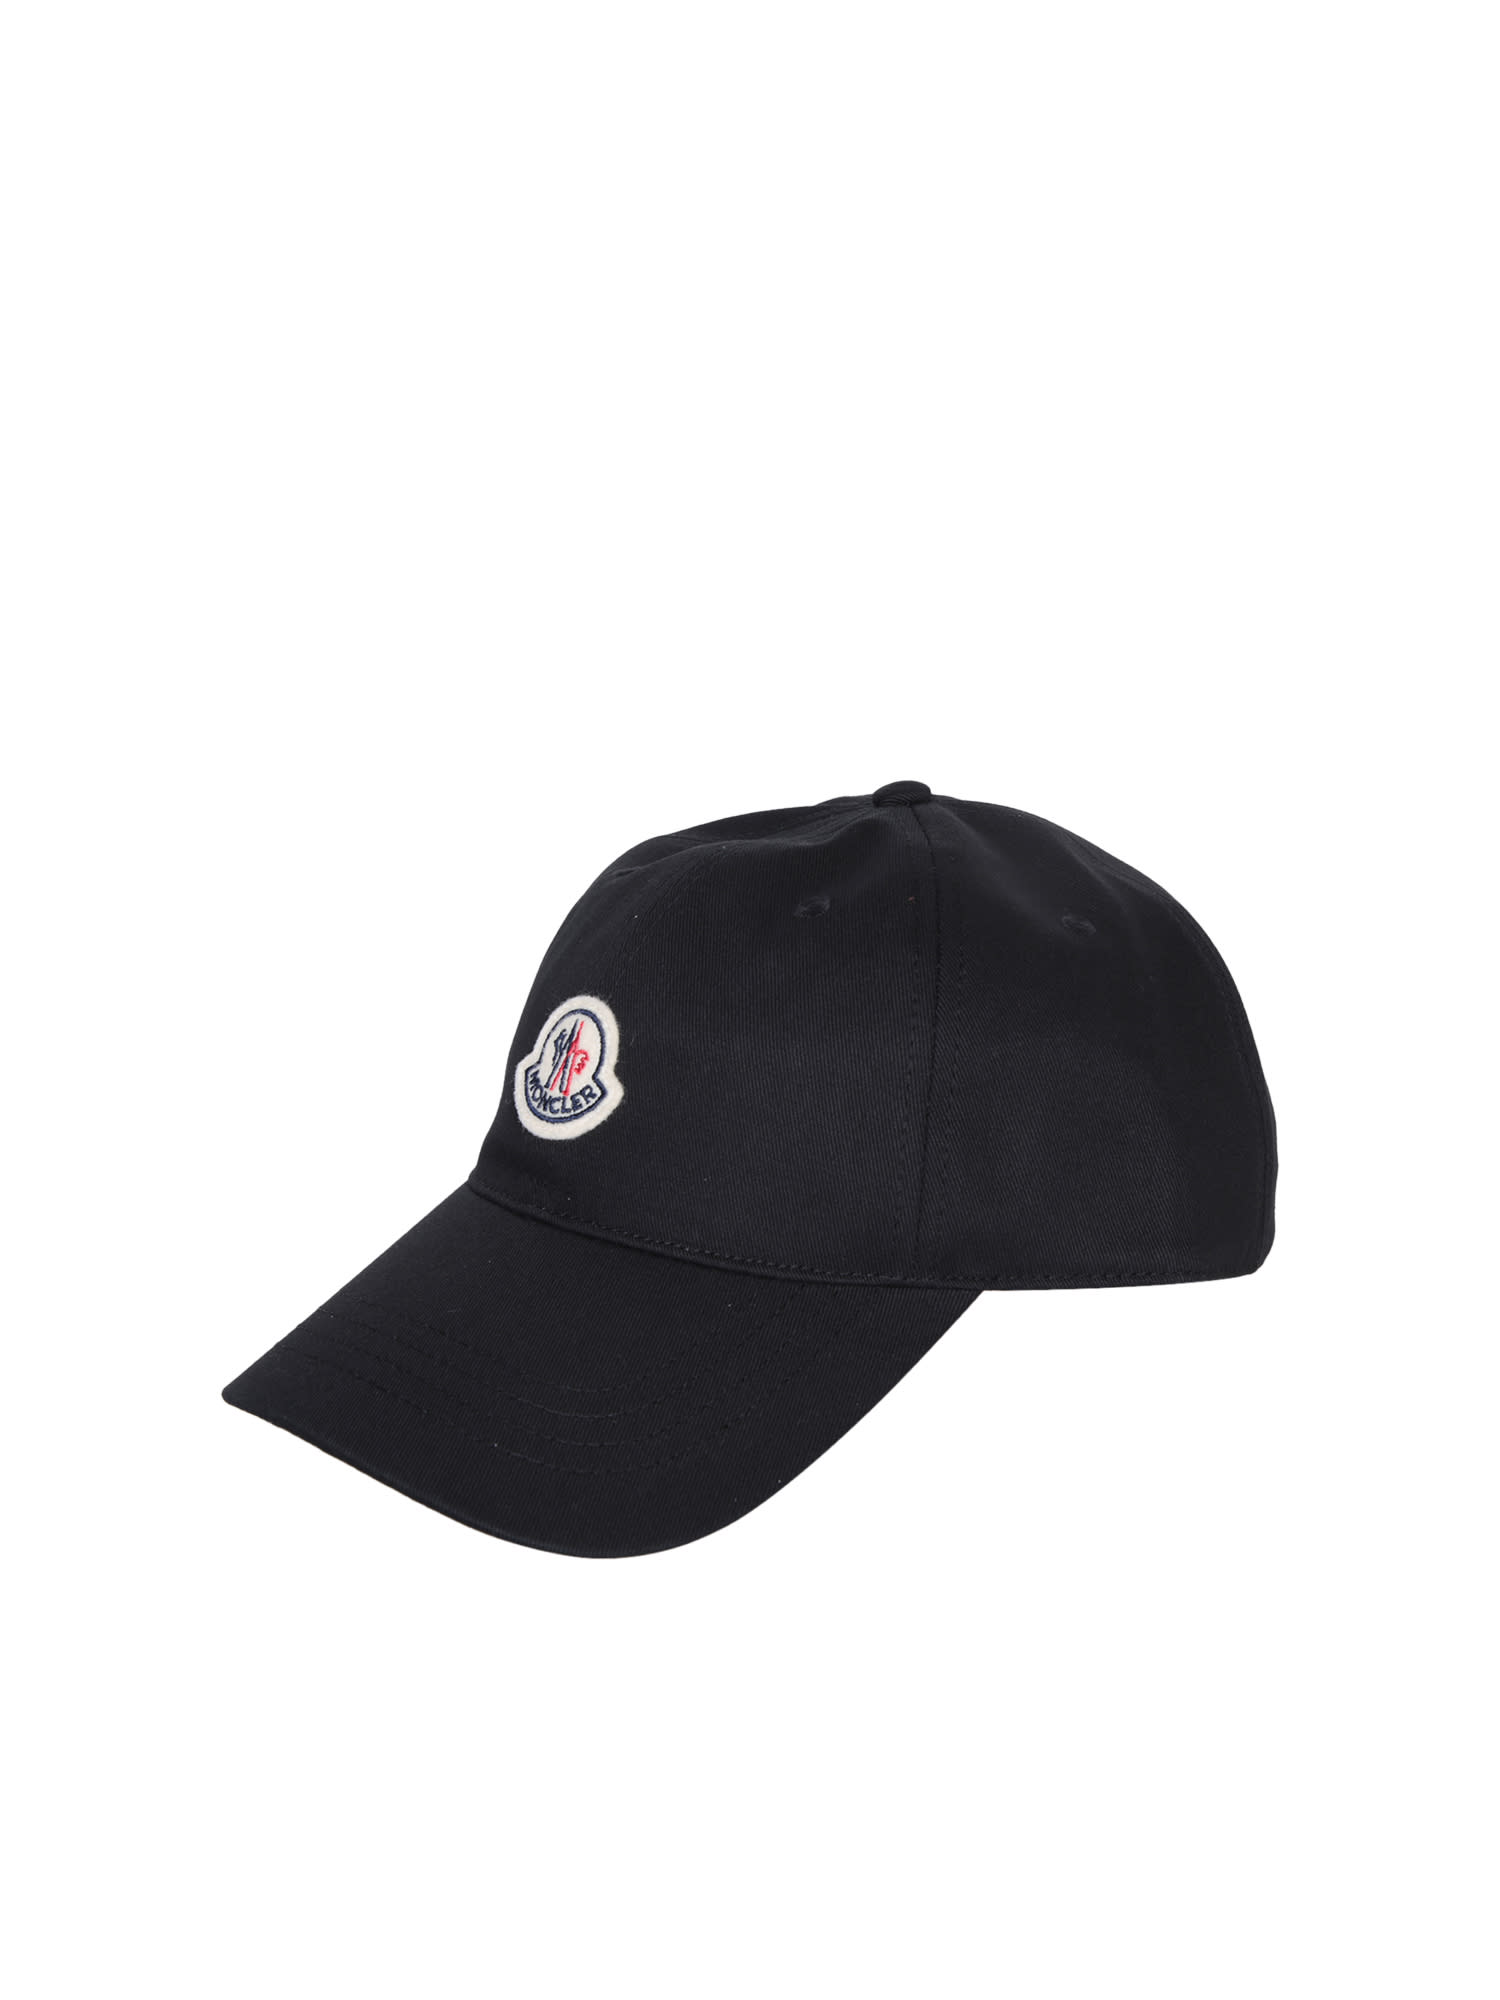 Moncler Baseball Hat